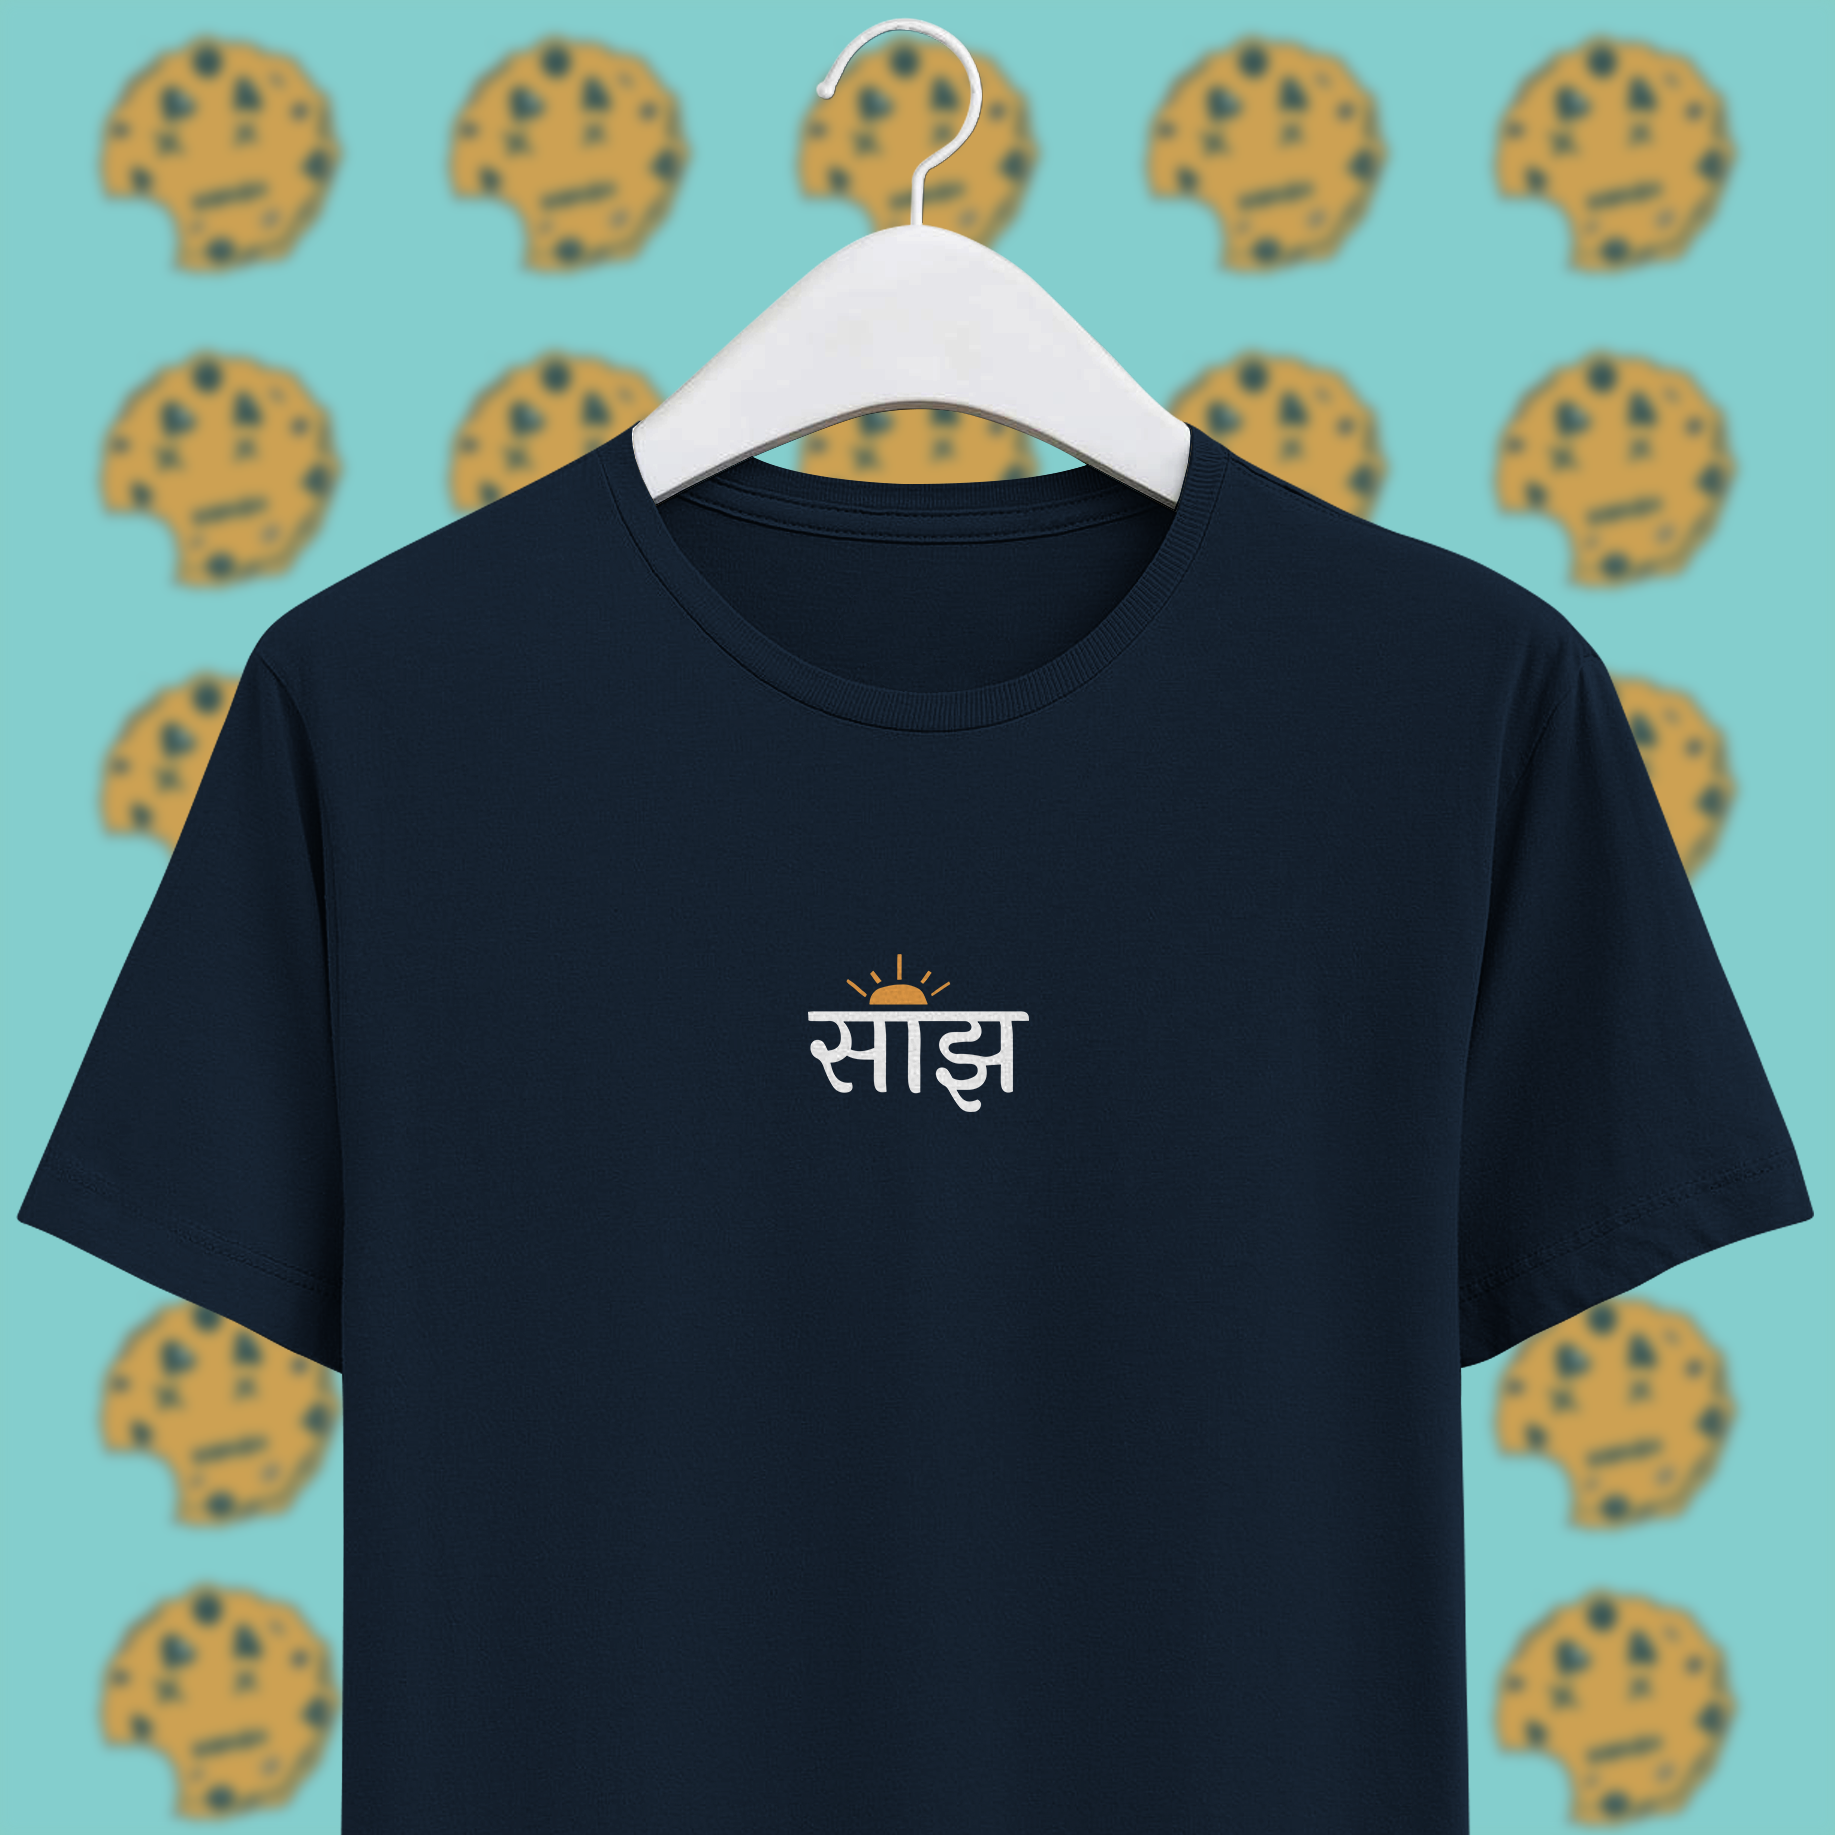 saanjh with setting sun hindi text on navy blue unisex t-shirt on hanger.